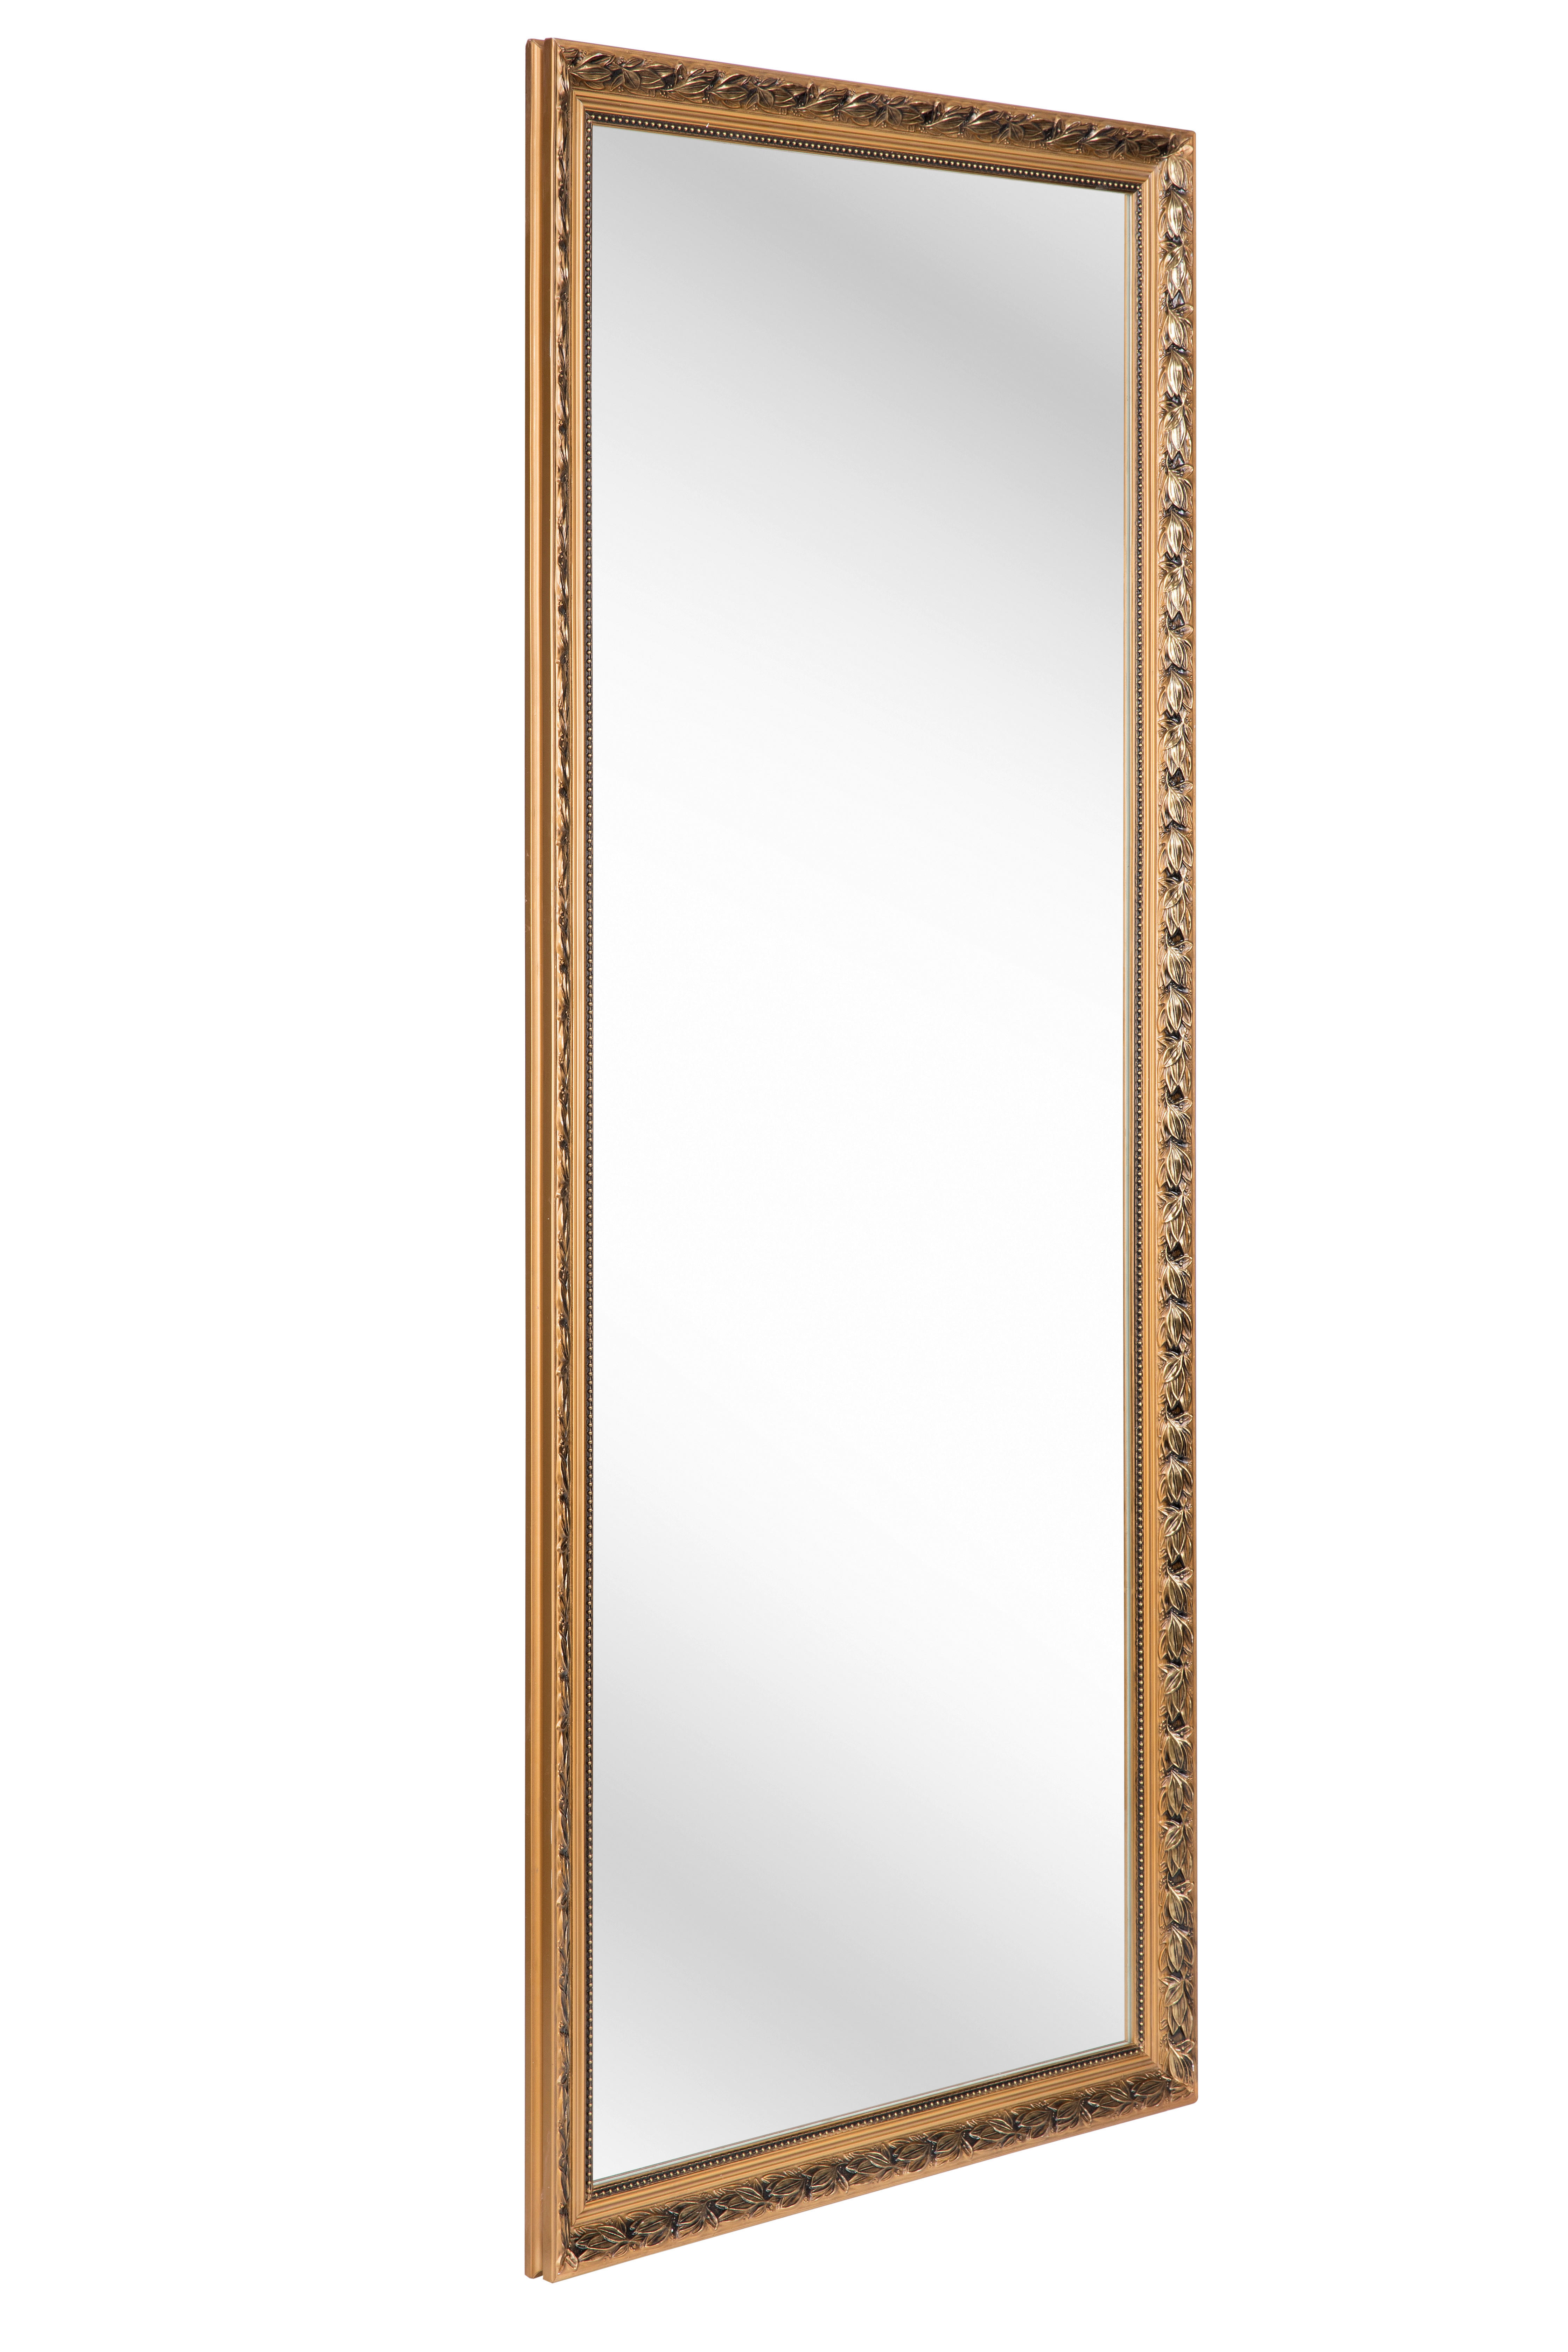 WANDSPIEGEL 70/170/3 cm  - Goldfarben, Lifestyle, Glas/Holz (70/170/3cm) - Carryhome